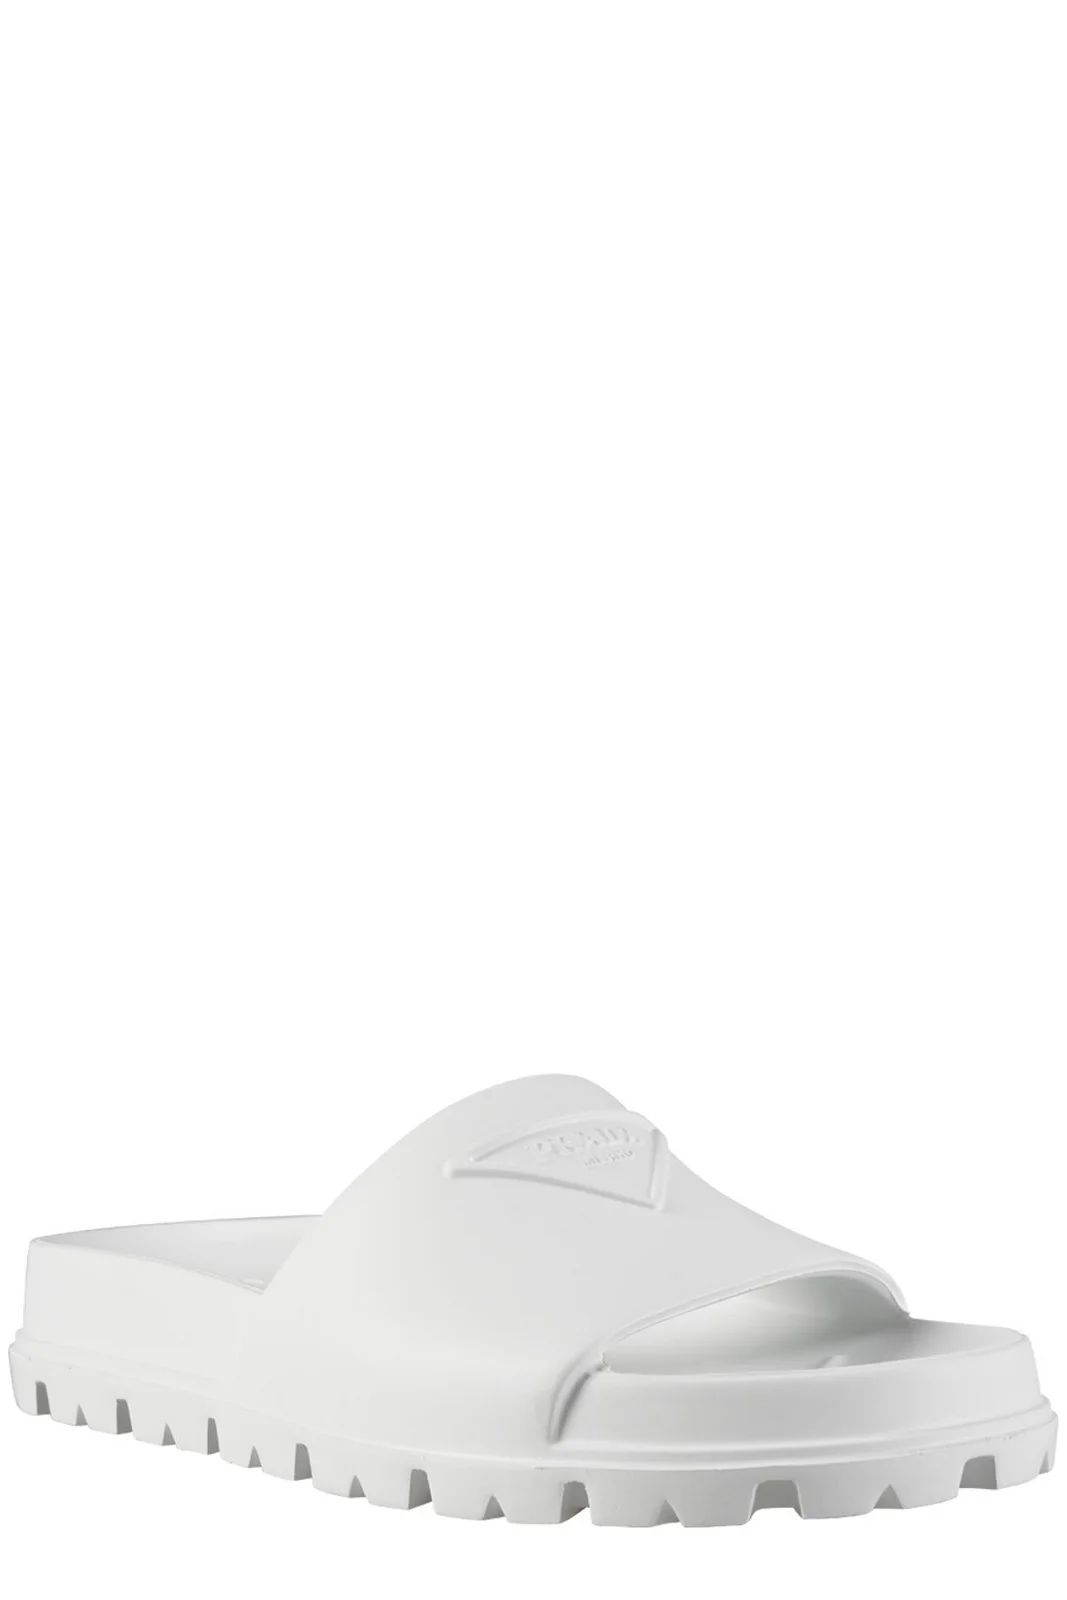 Prada Logo Embossed Sandals | Cettire Global